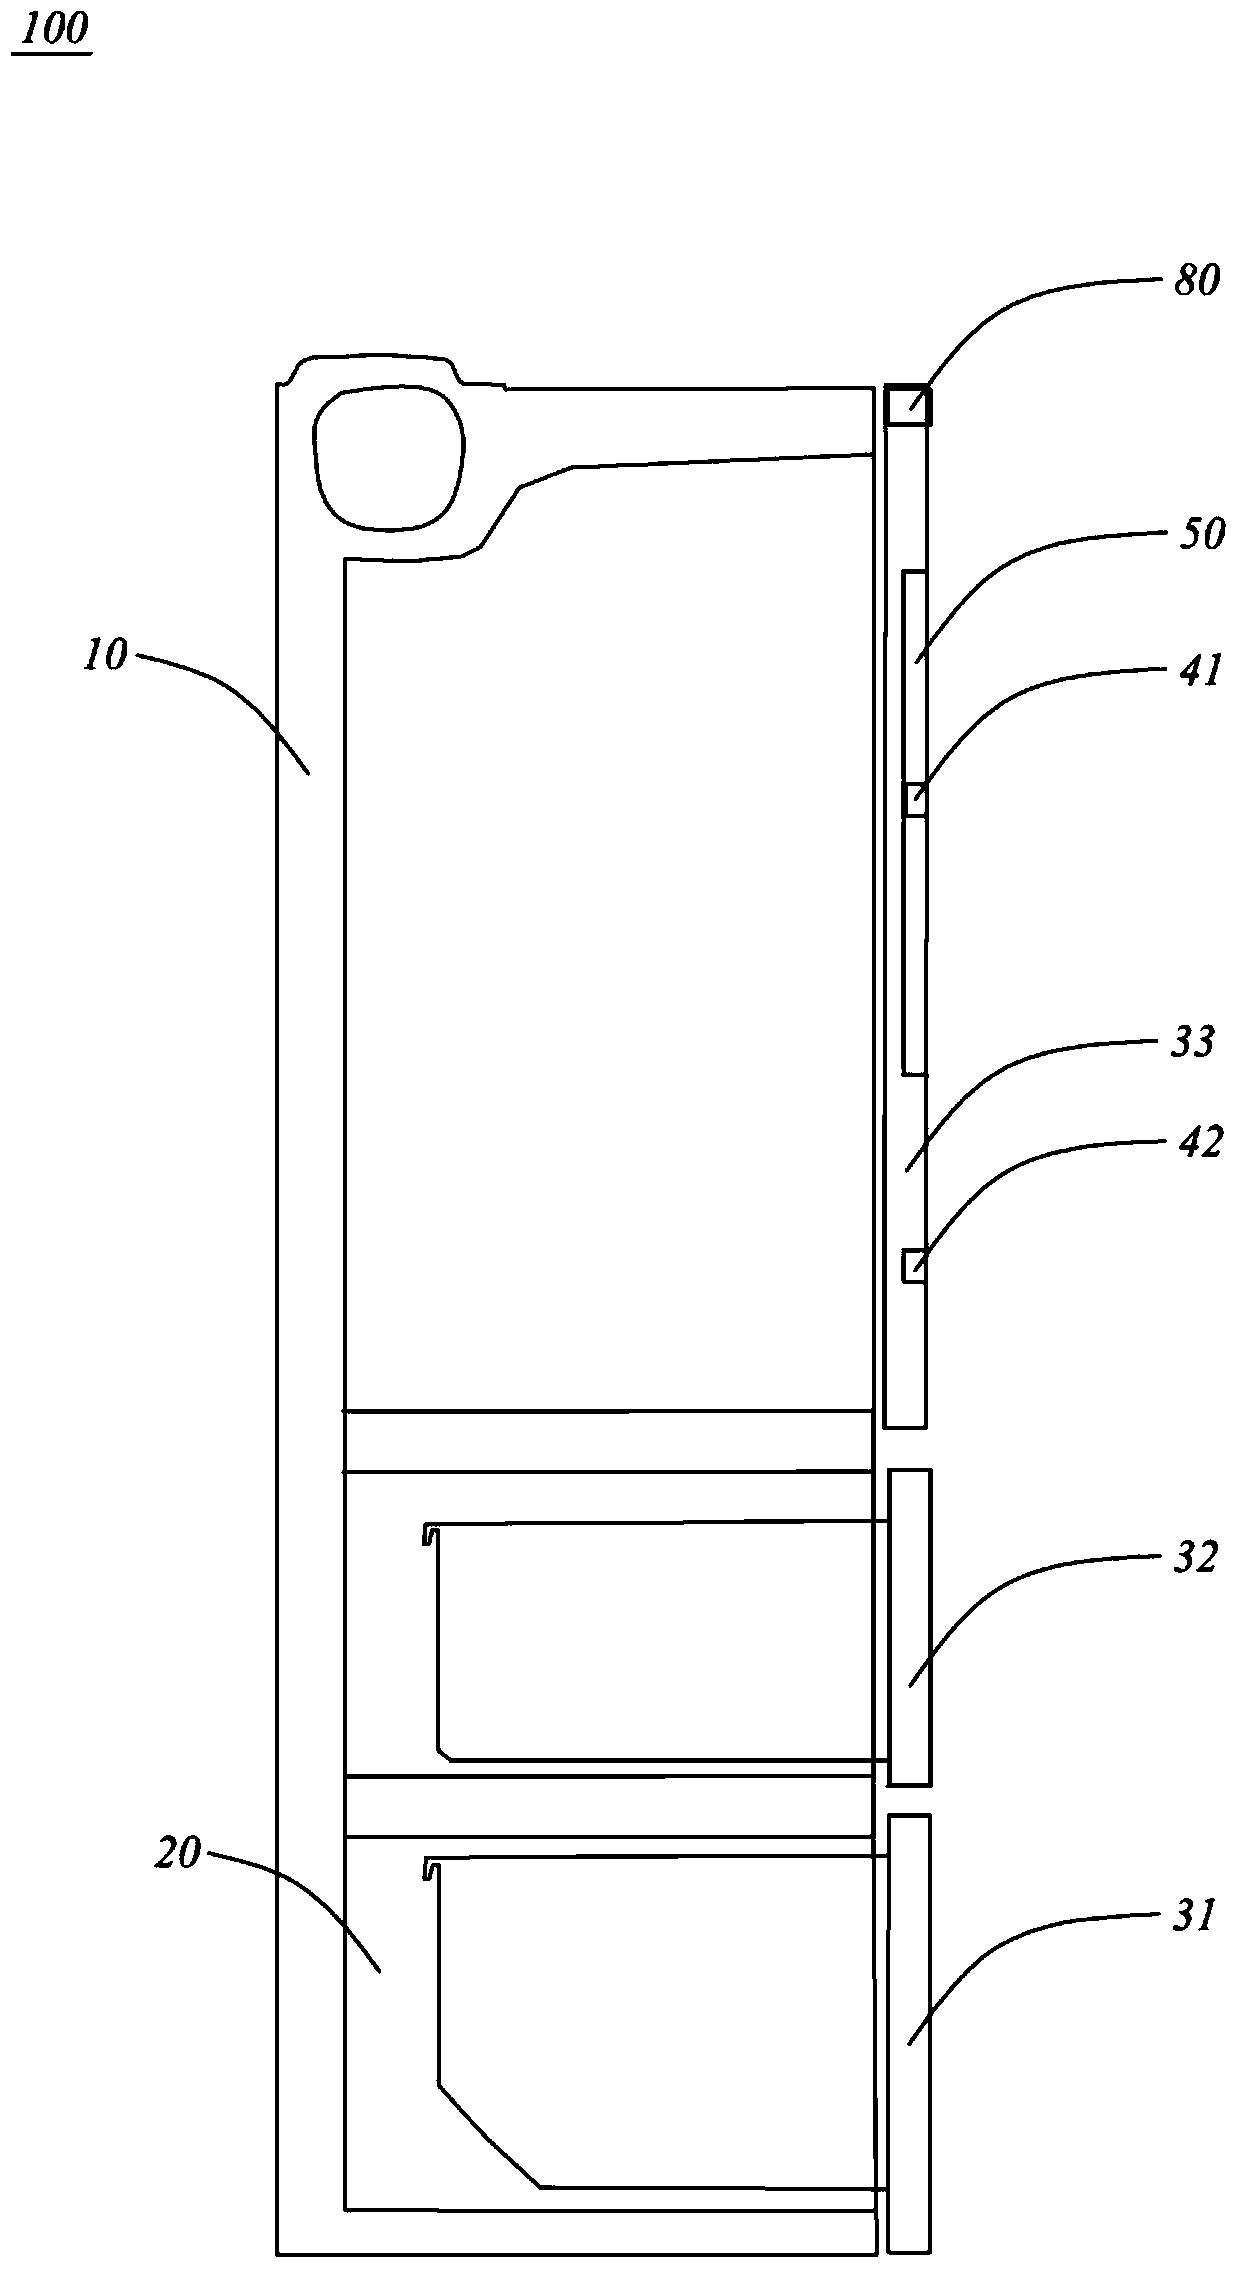 Refrigerator with non-touch door opening and door opening control method